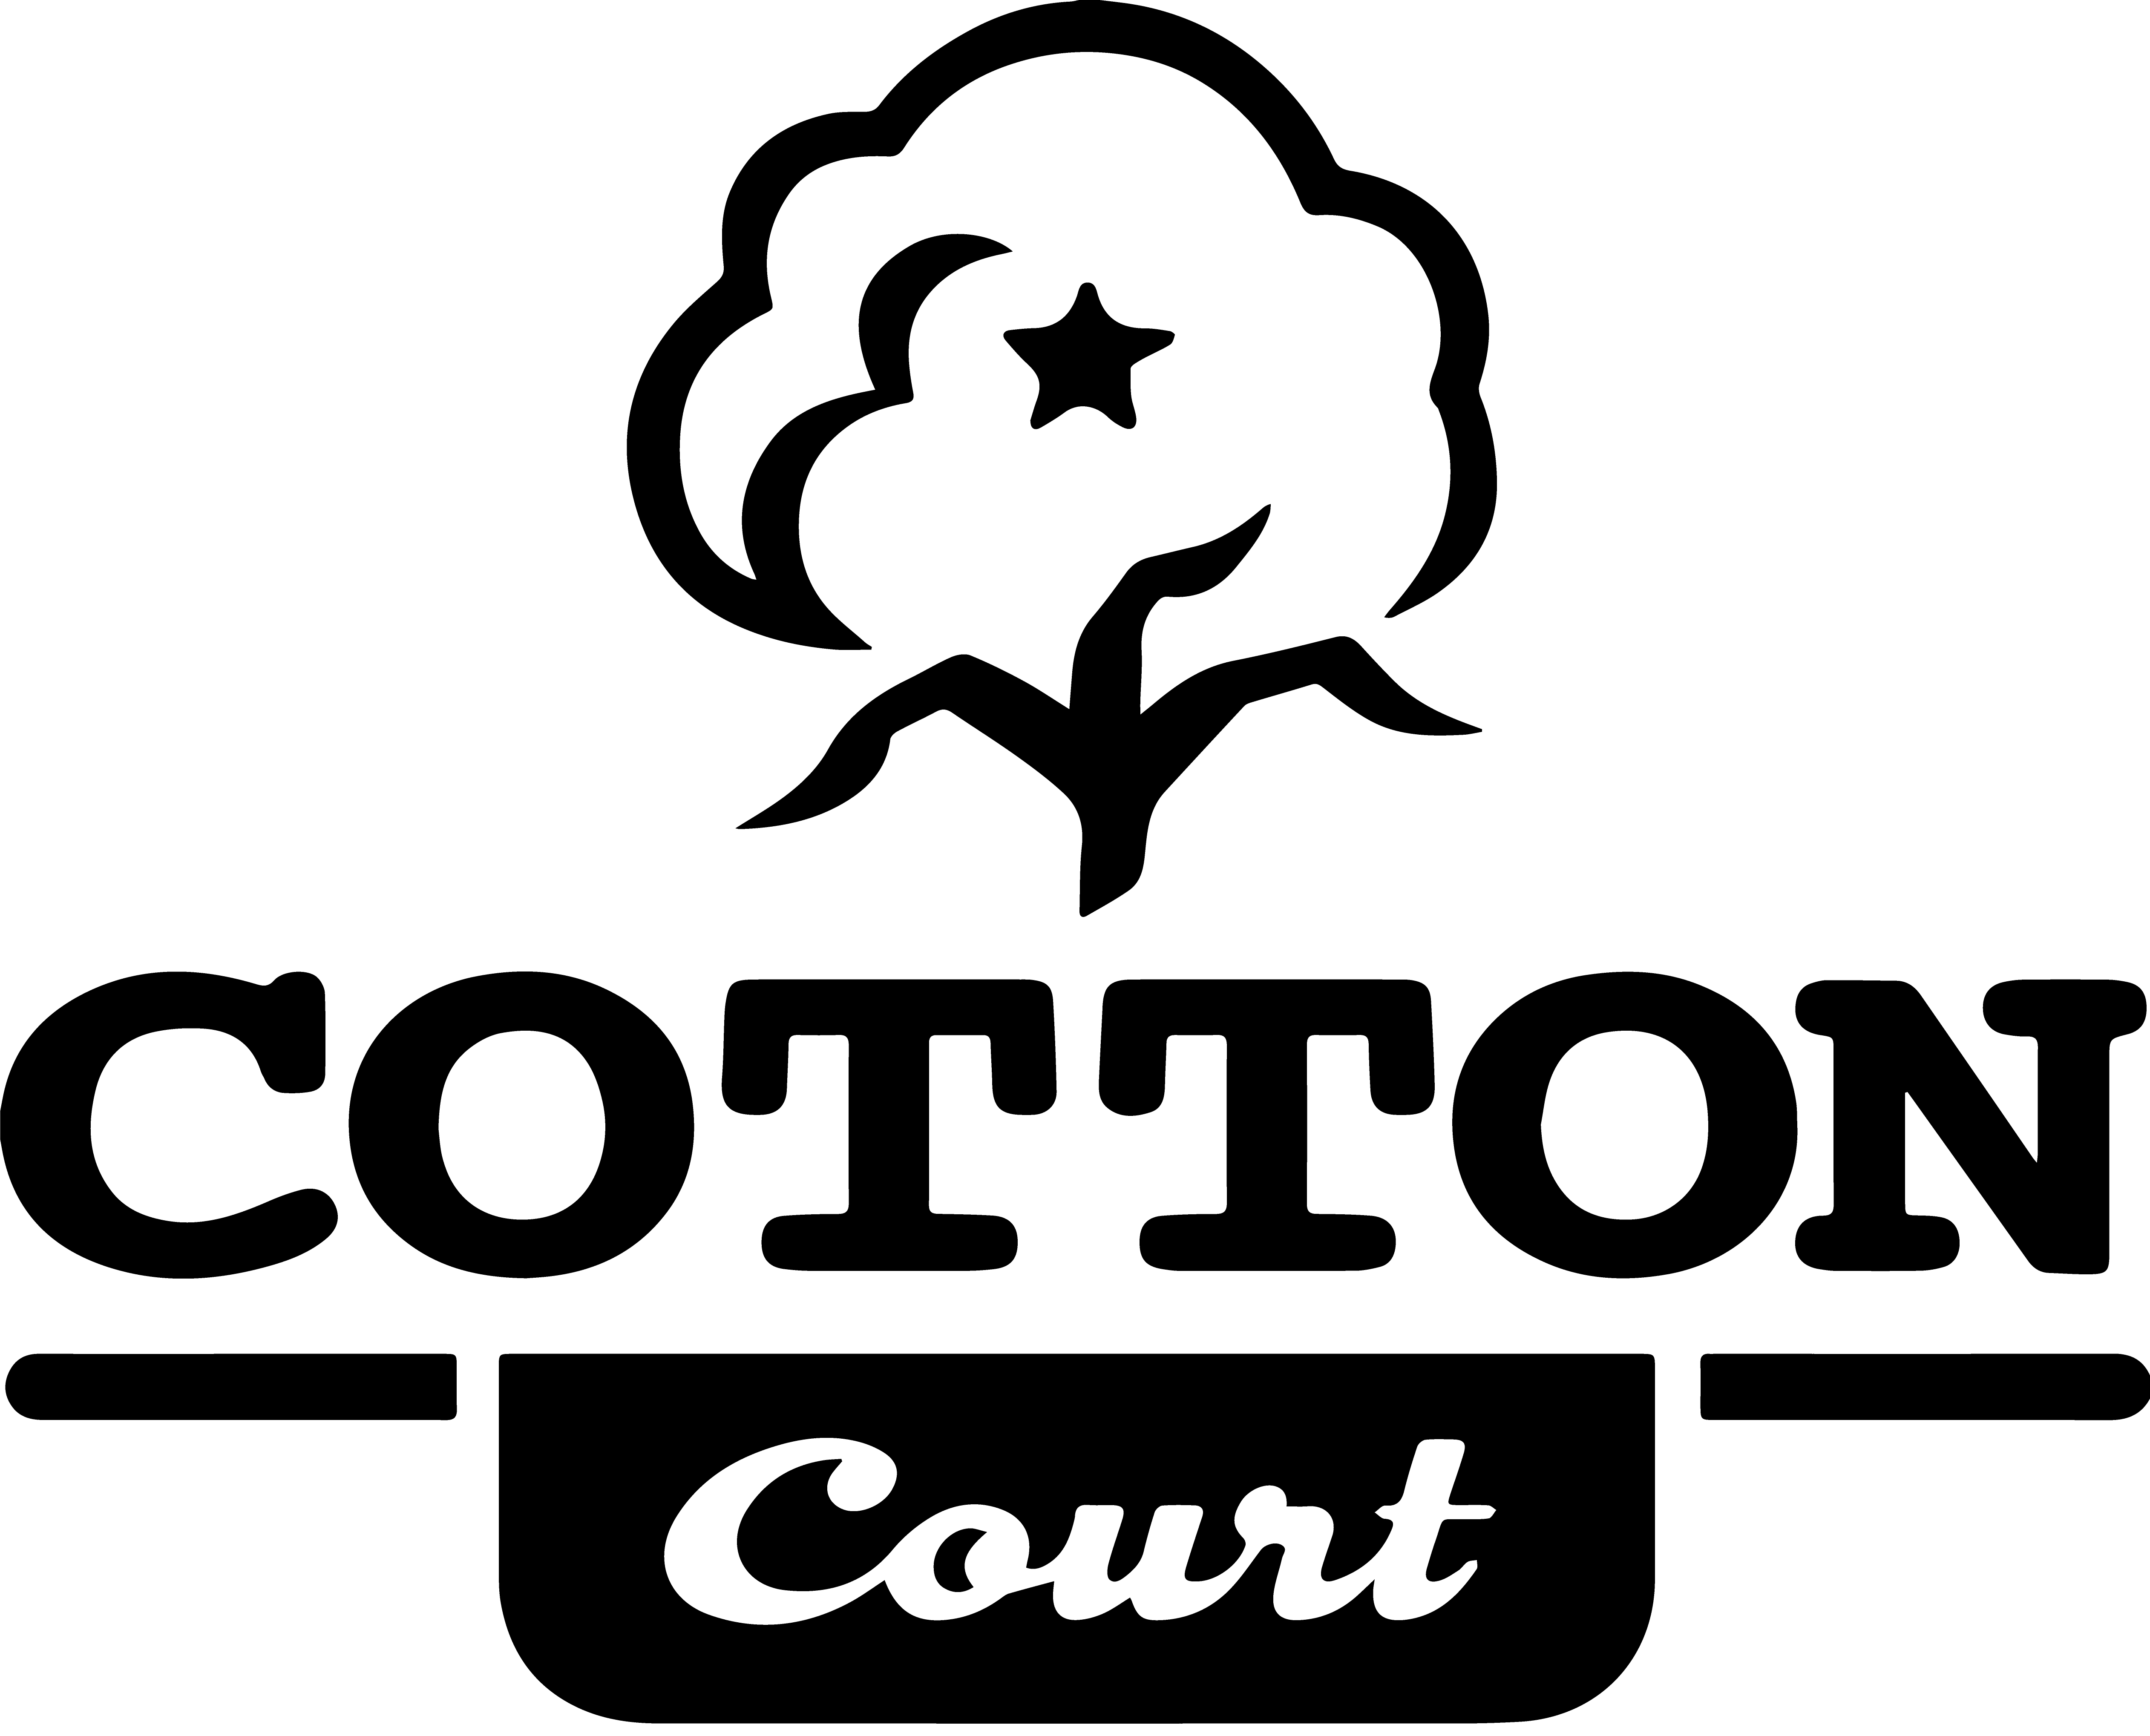 Cotton Court